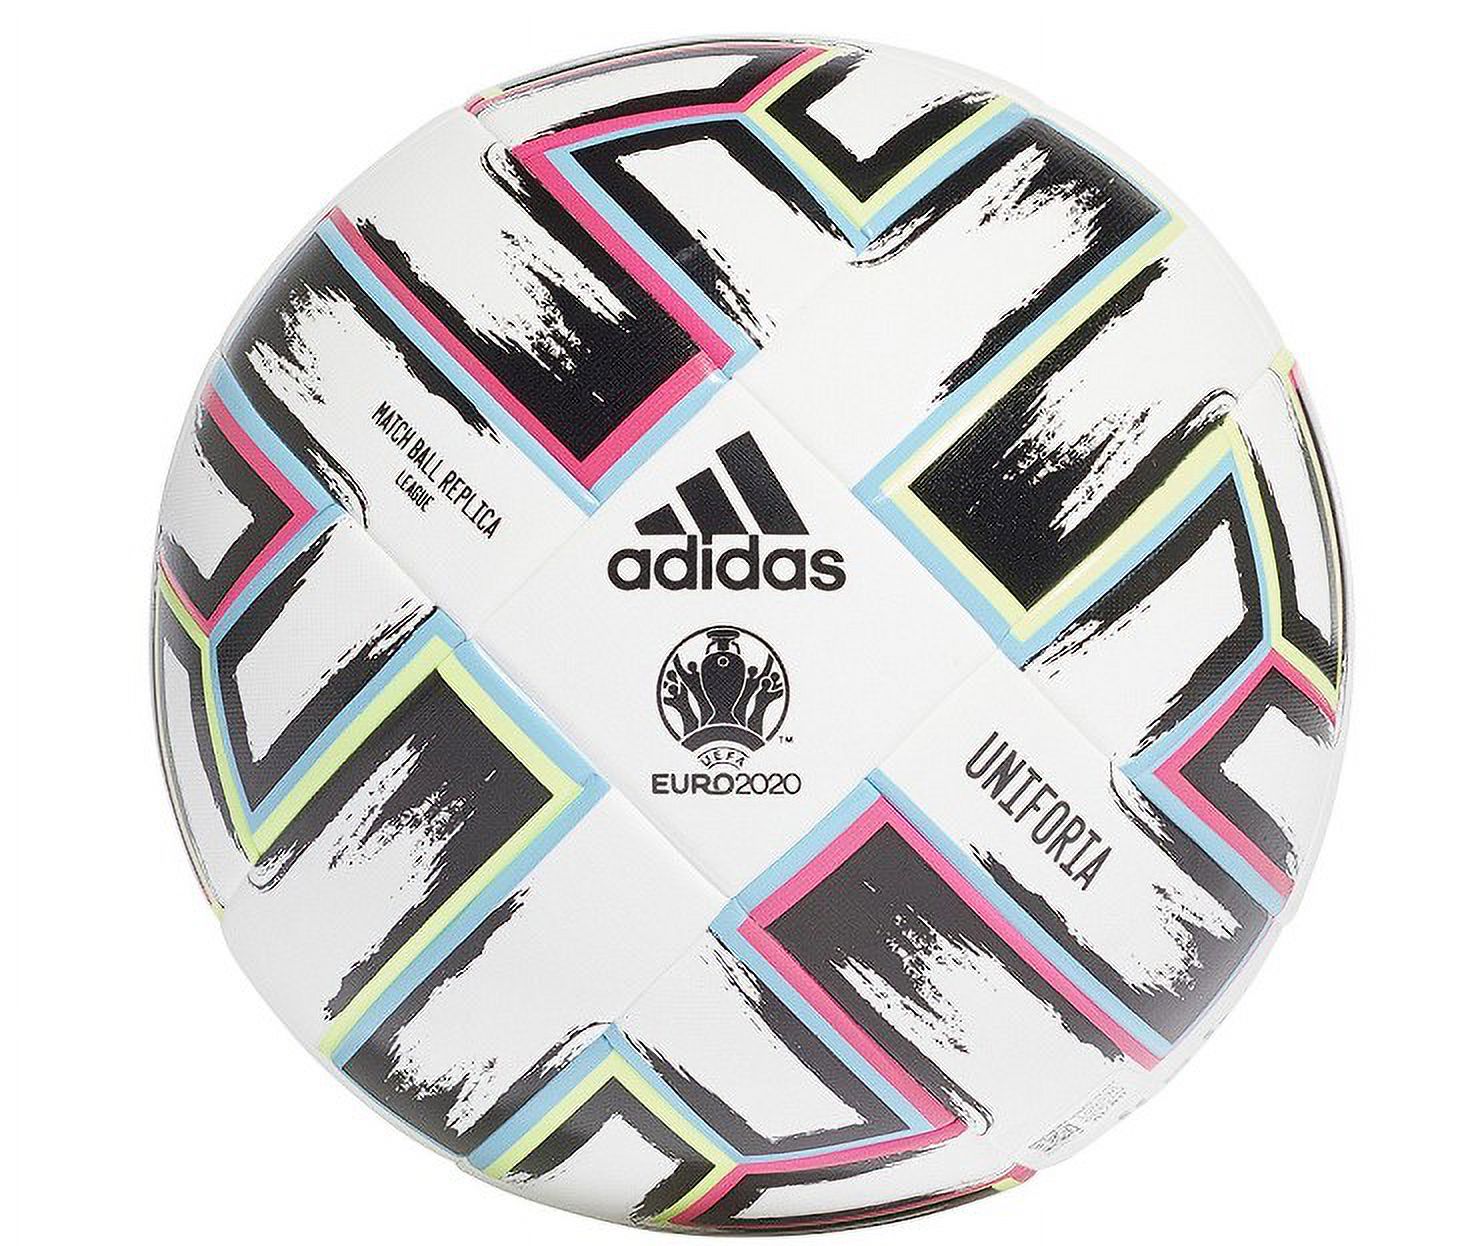 Adidas 2020 Uniforia League Soccer Ball - image 2 of 2